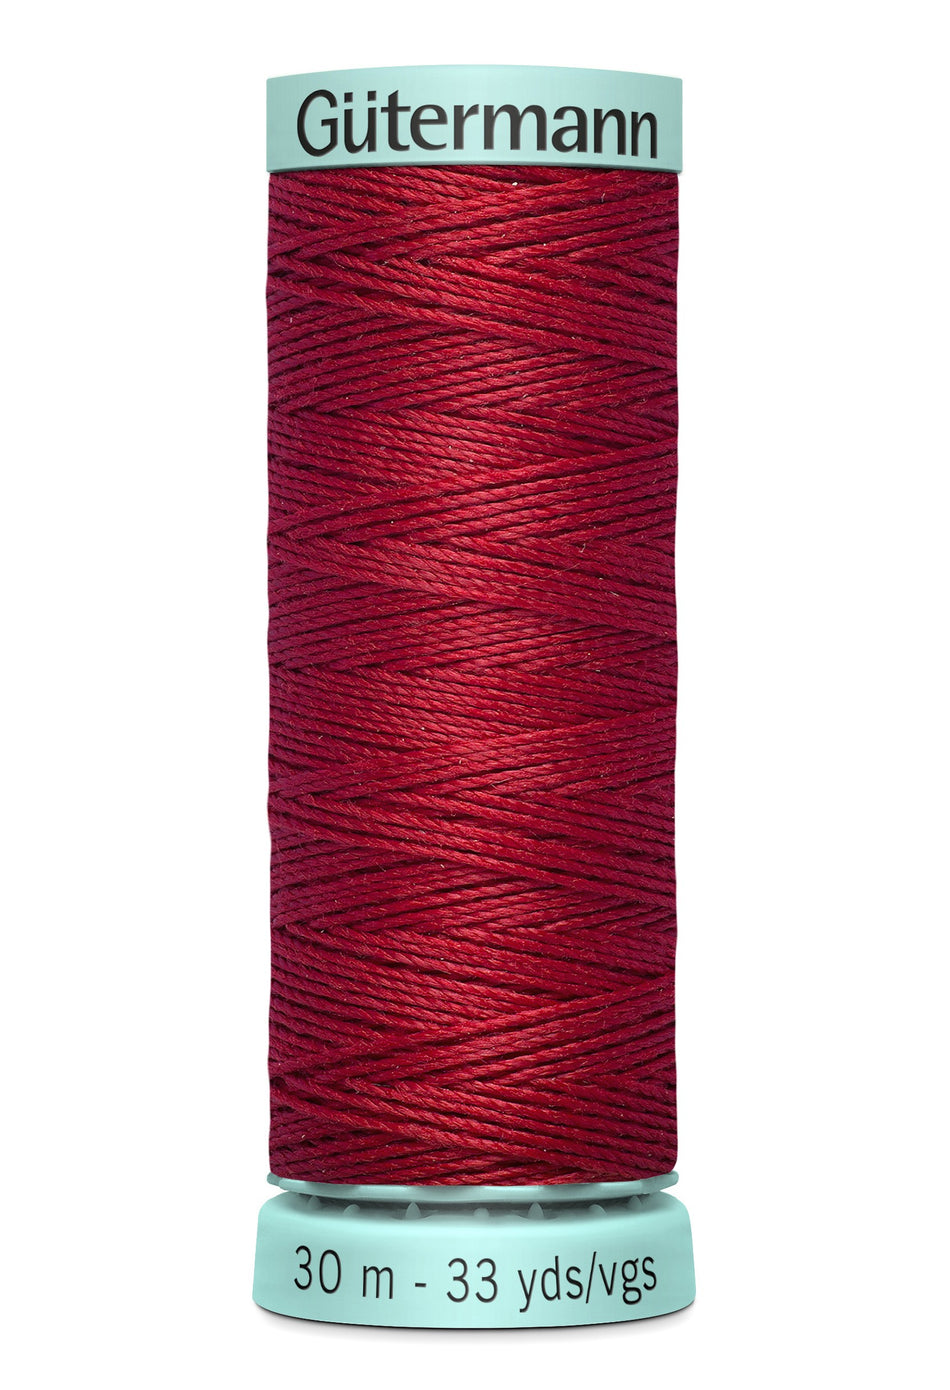 Silk Cord, Dark Red